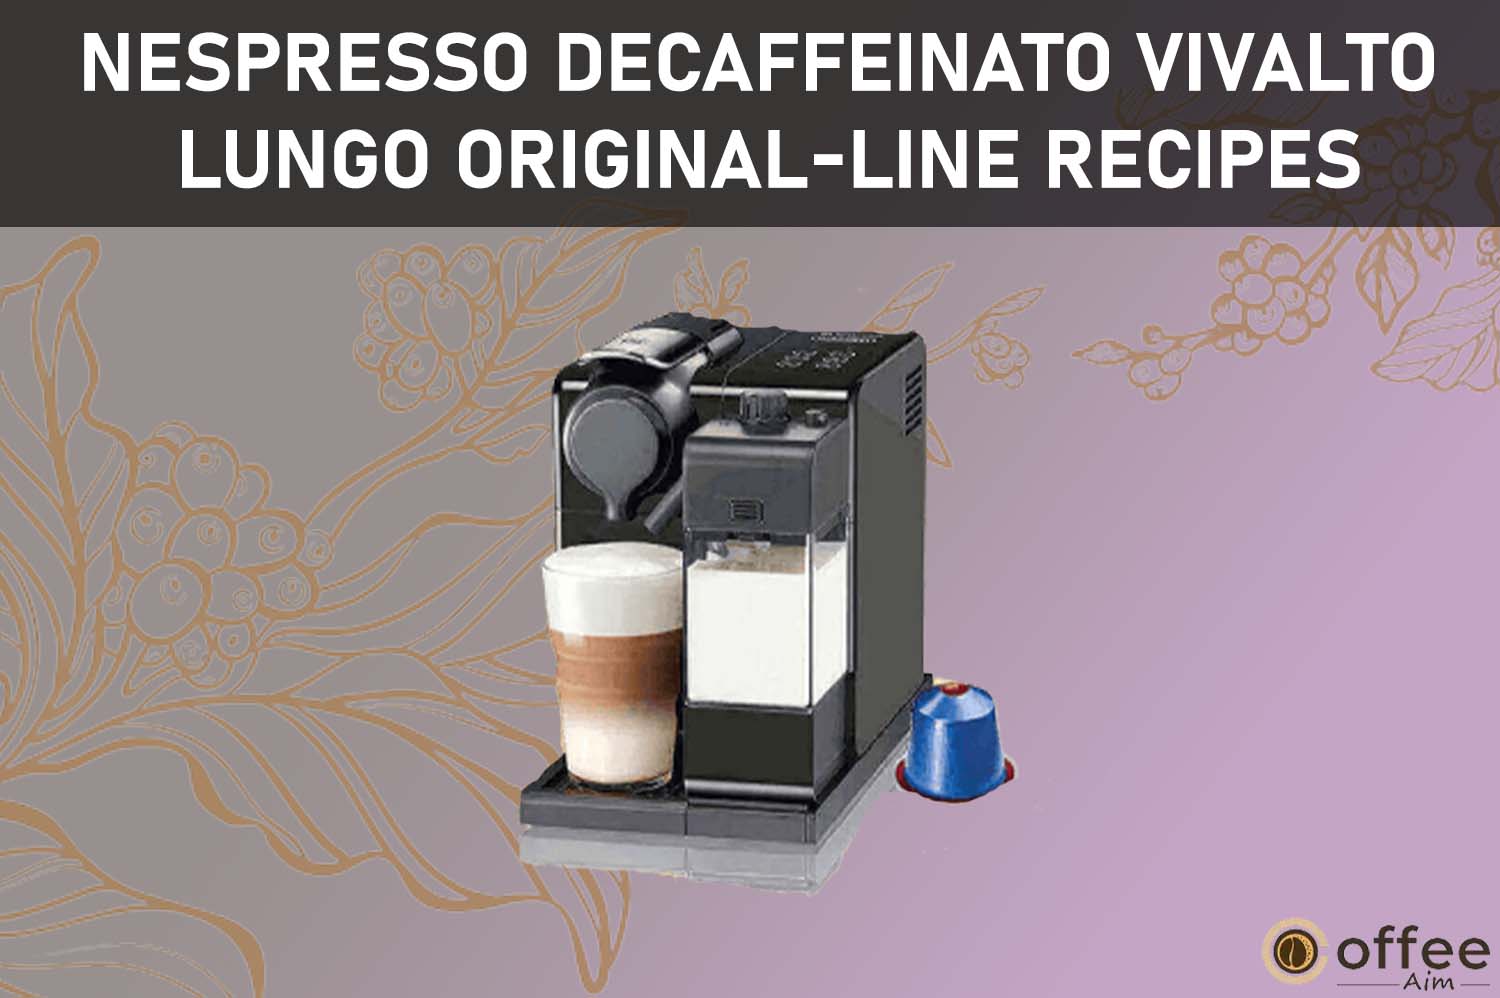 Featured image for the article "Nespresso Decaffeinato Vivalto Lungo Original-Line Recipes"